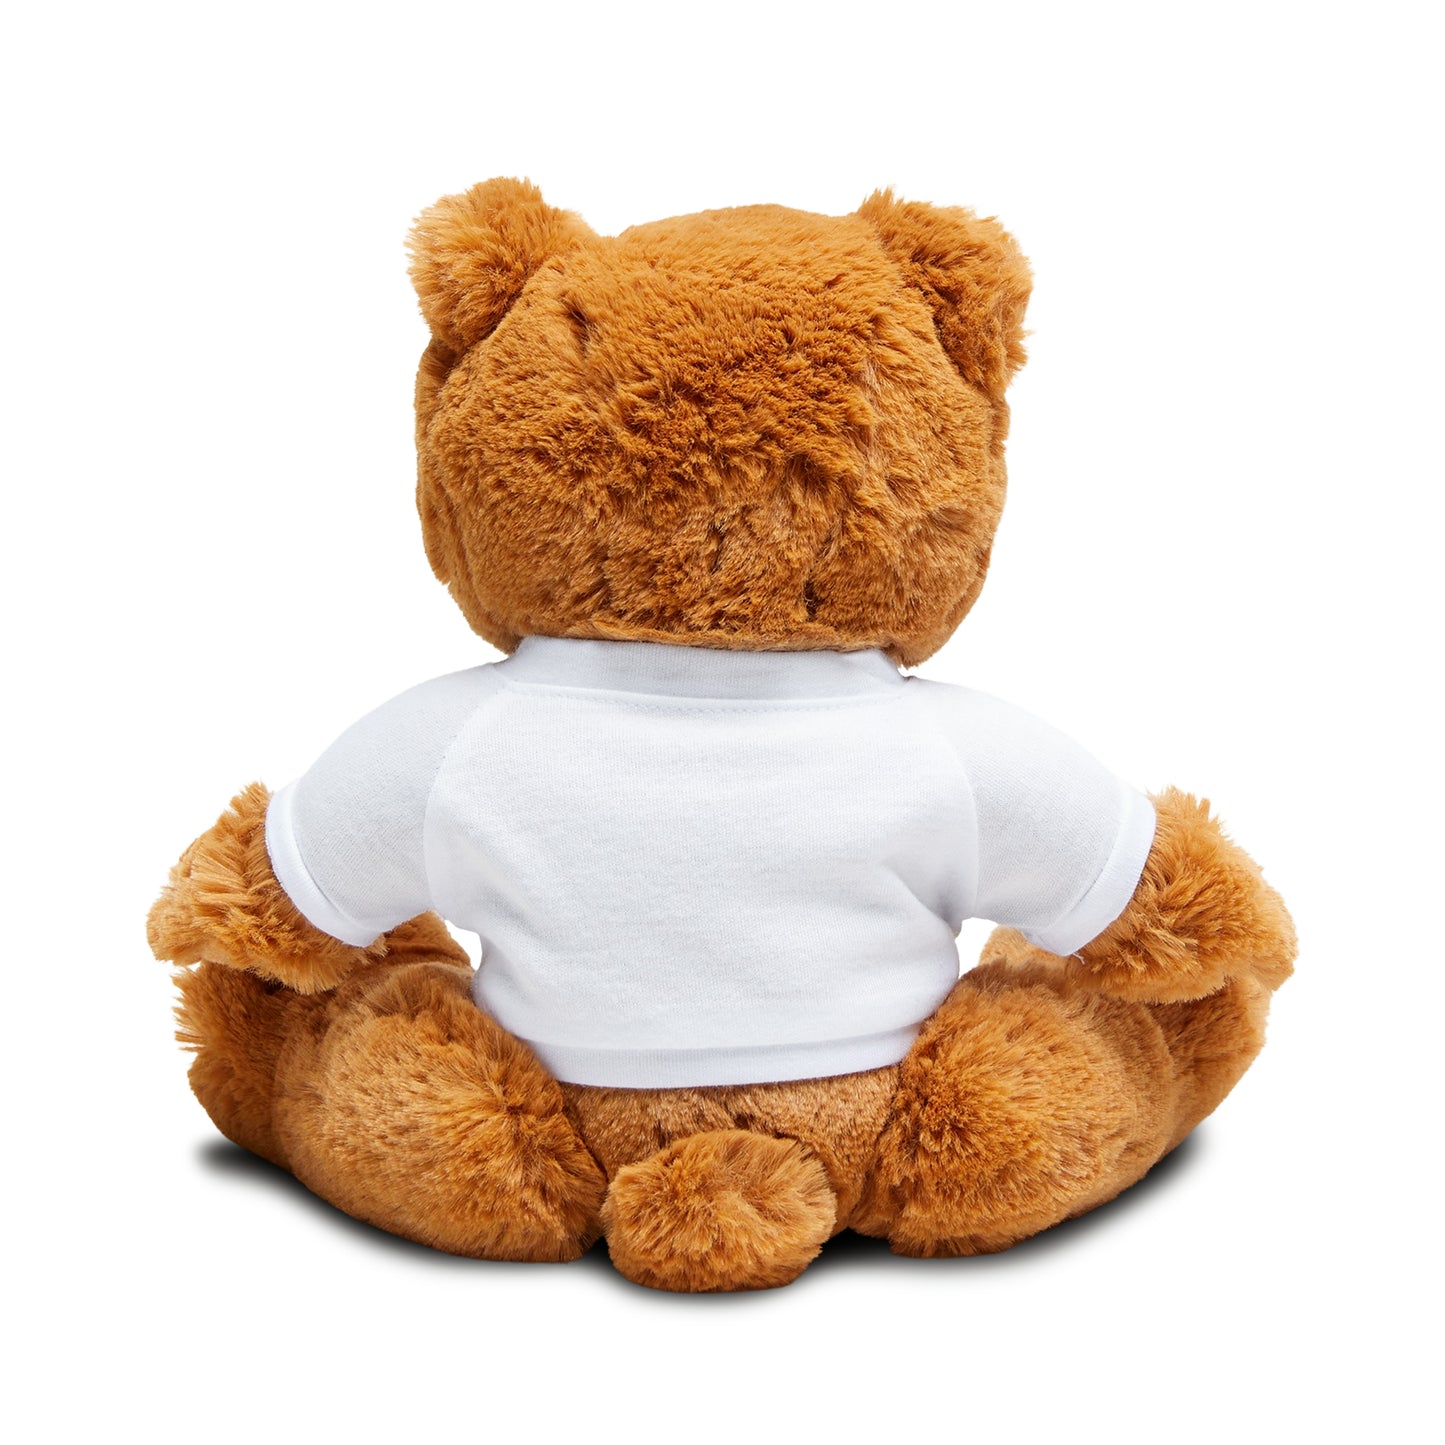 Nothing Is Too Big - Teddy Bear